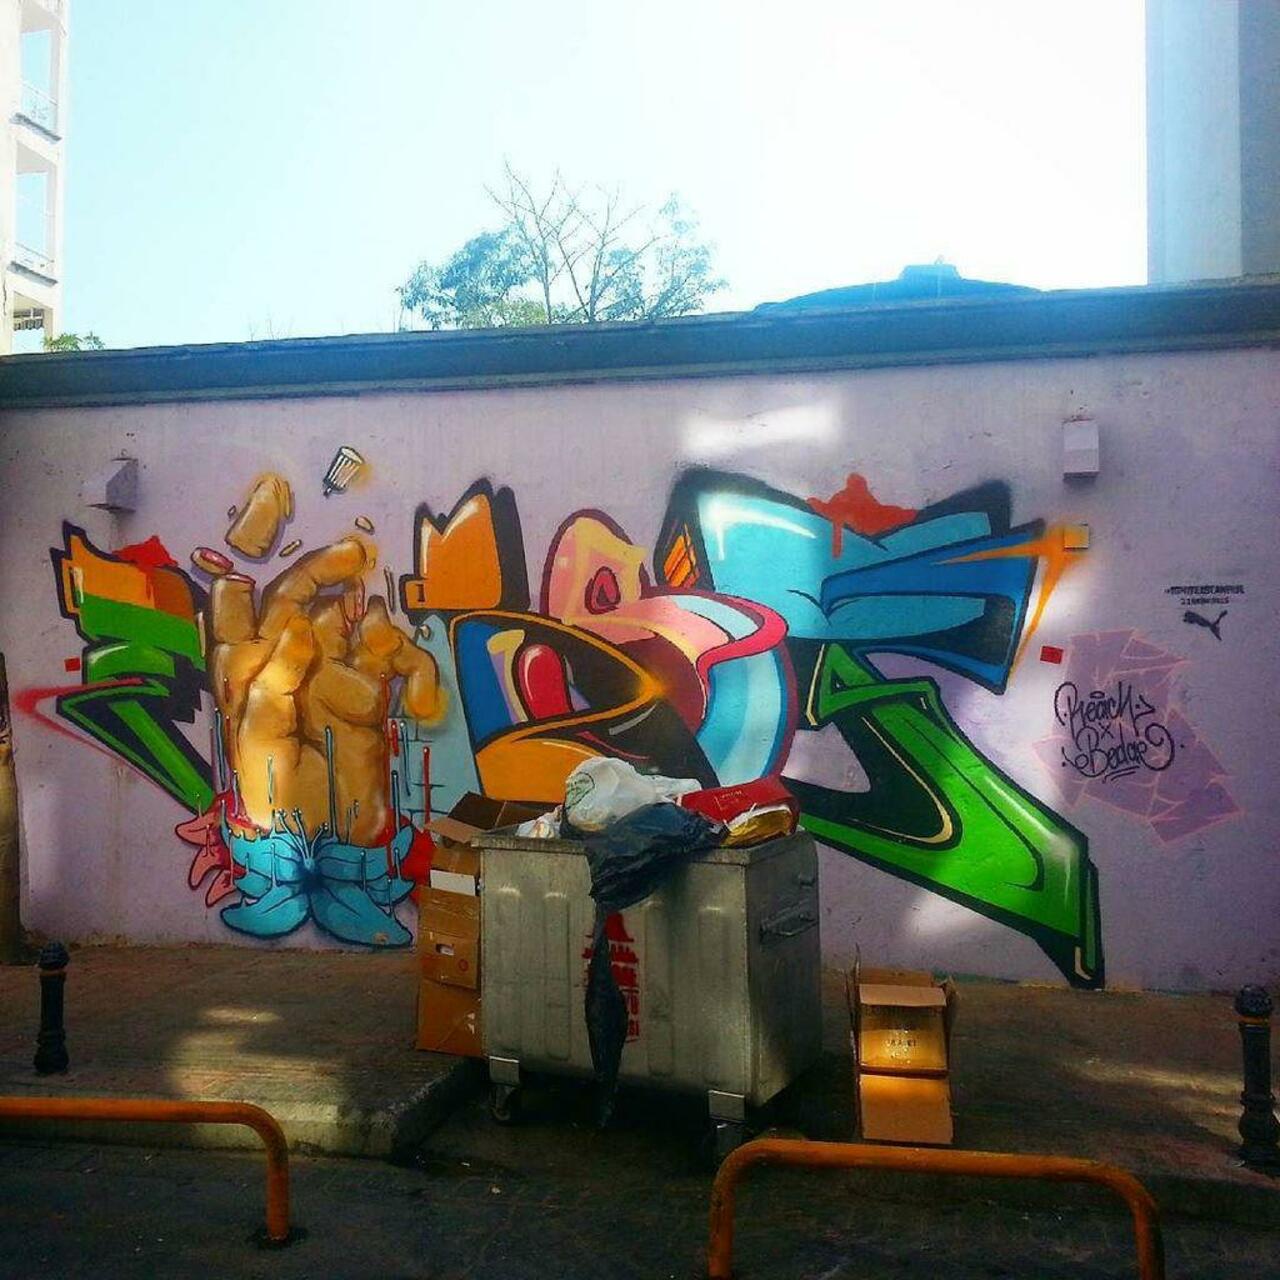 Tha Garbage as a part of the art #streetart #streetarteverywhere #streetartistanbul #graffiti #graffitiart #garbage… http://t.co/WRlPmfyWtr